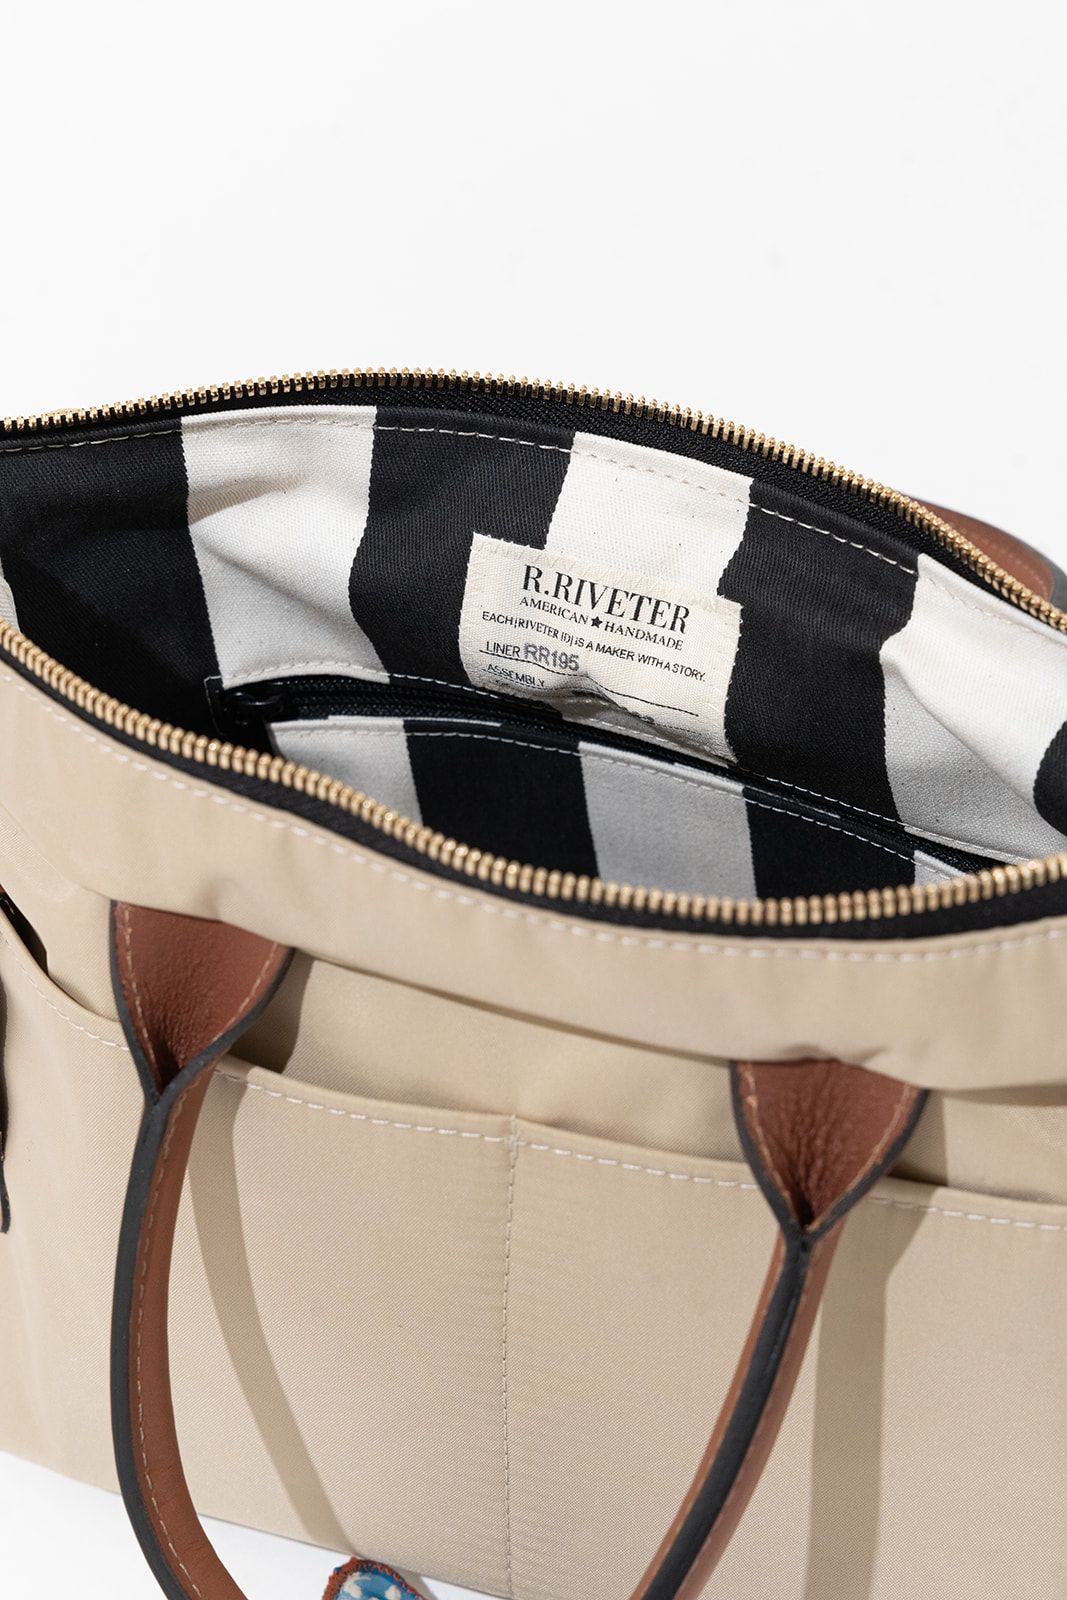 Dot | Special Edition Khaki Nylon + Tan Leather w/ Coast Guard Scarf